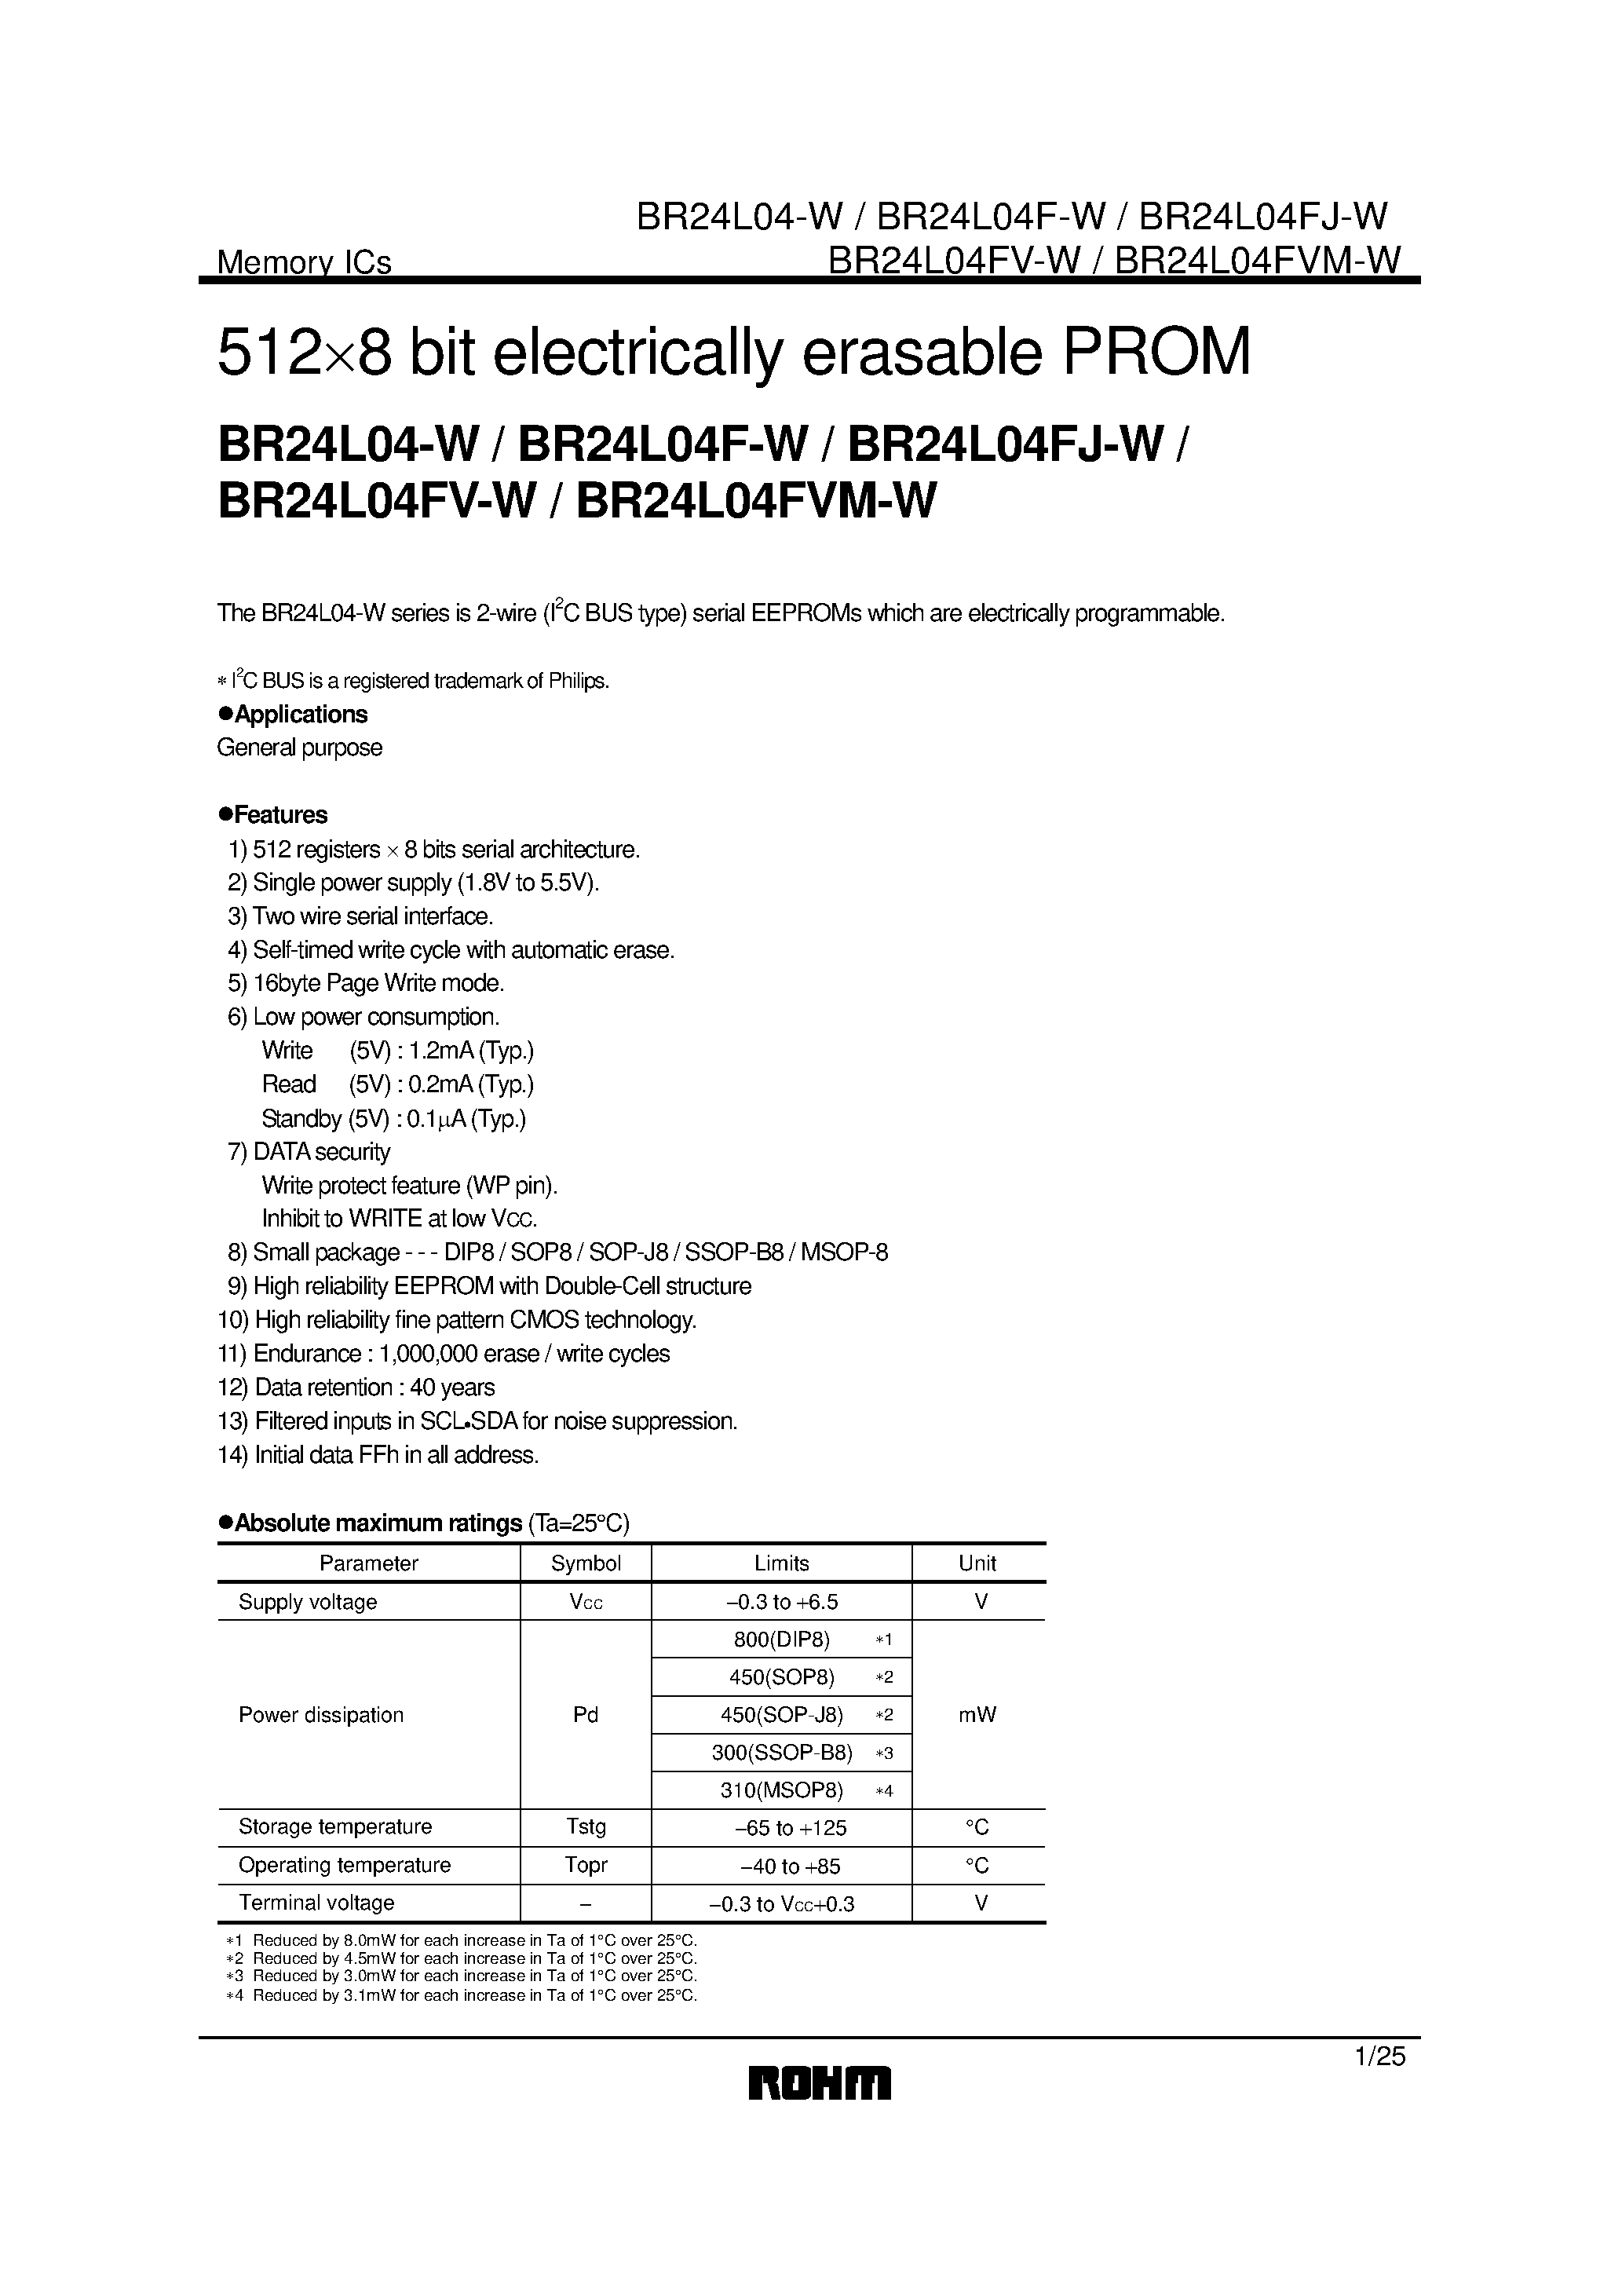 Datasheet BR24L04FV-W - 5128 bit electrically erasable PROM page 1